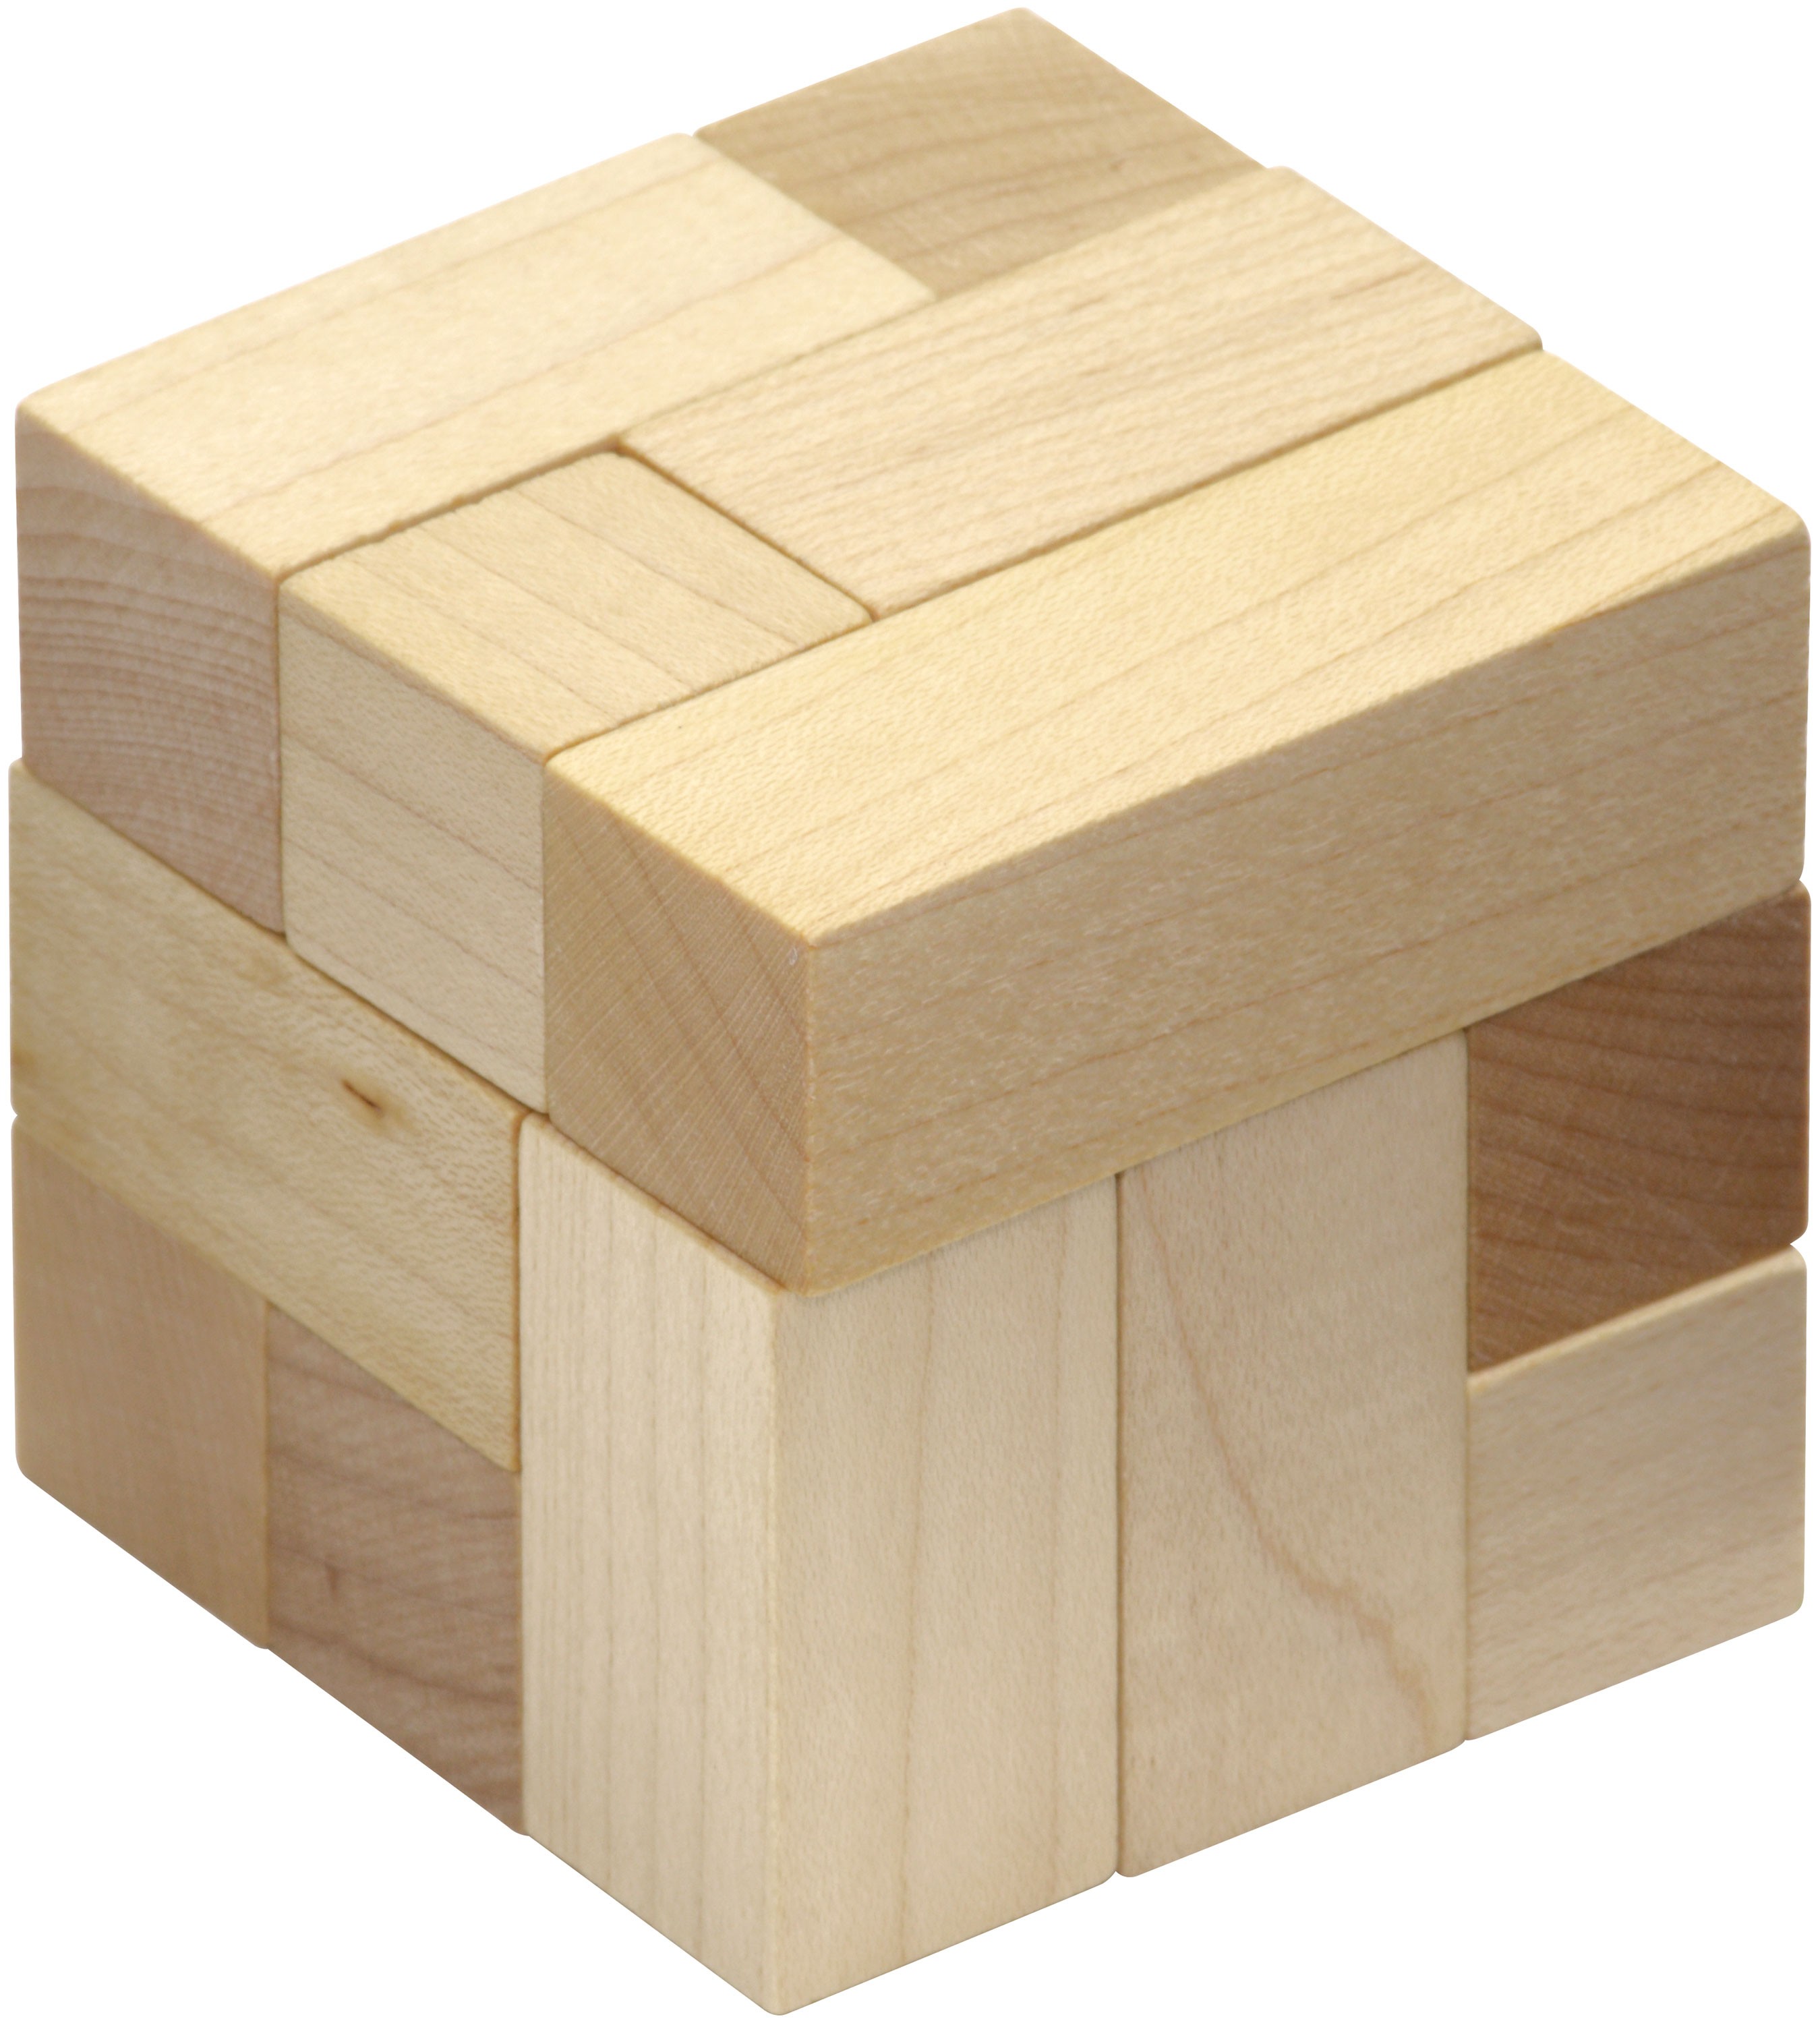 Making cubes. Головоломка куб сома s105. Деревянная головоломка куб. Головоломка деревянный кубик. Головоломка кубики сома.